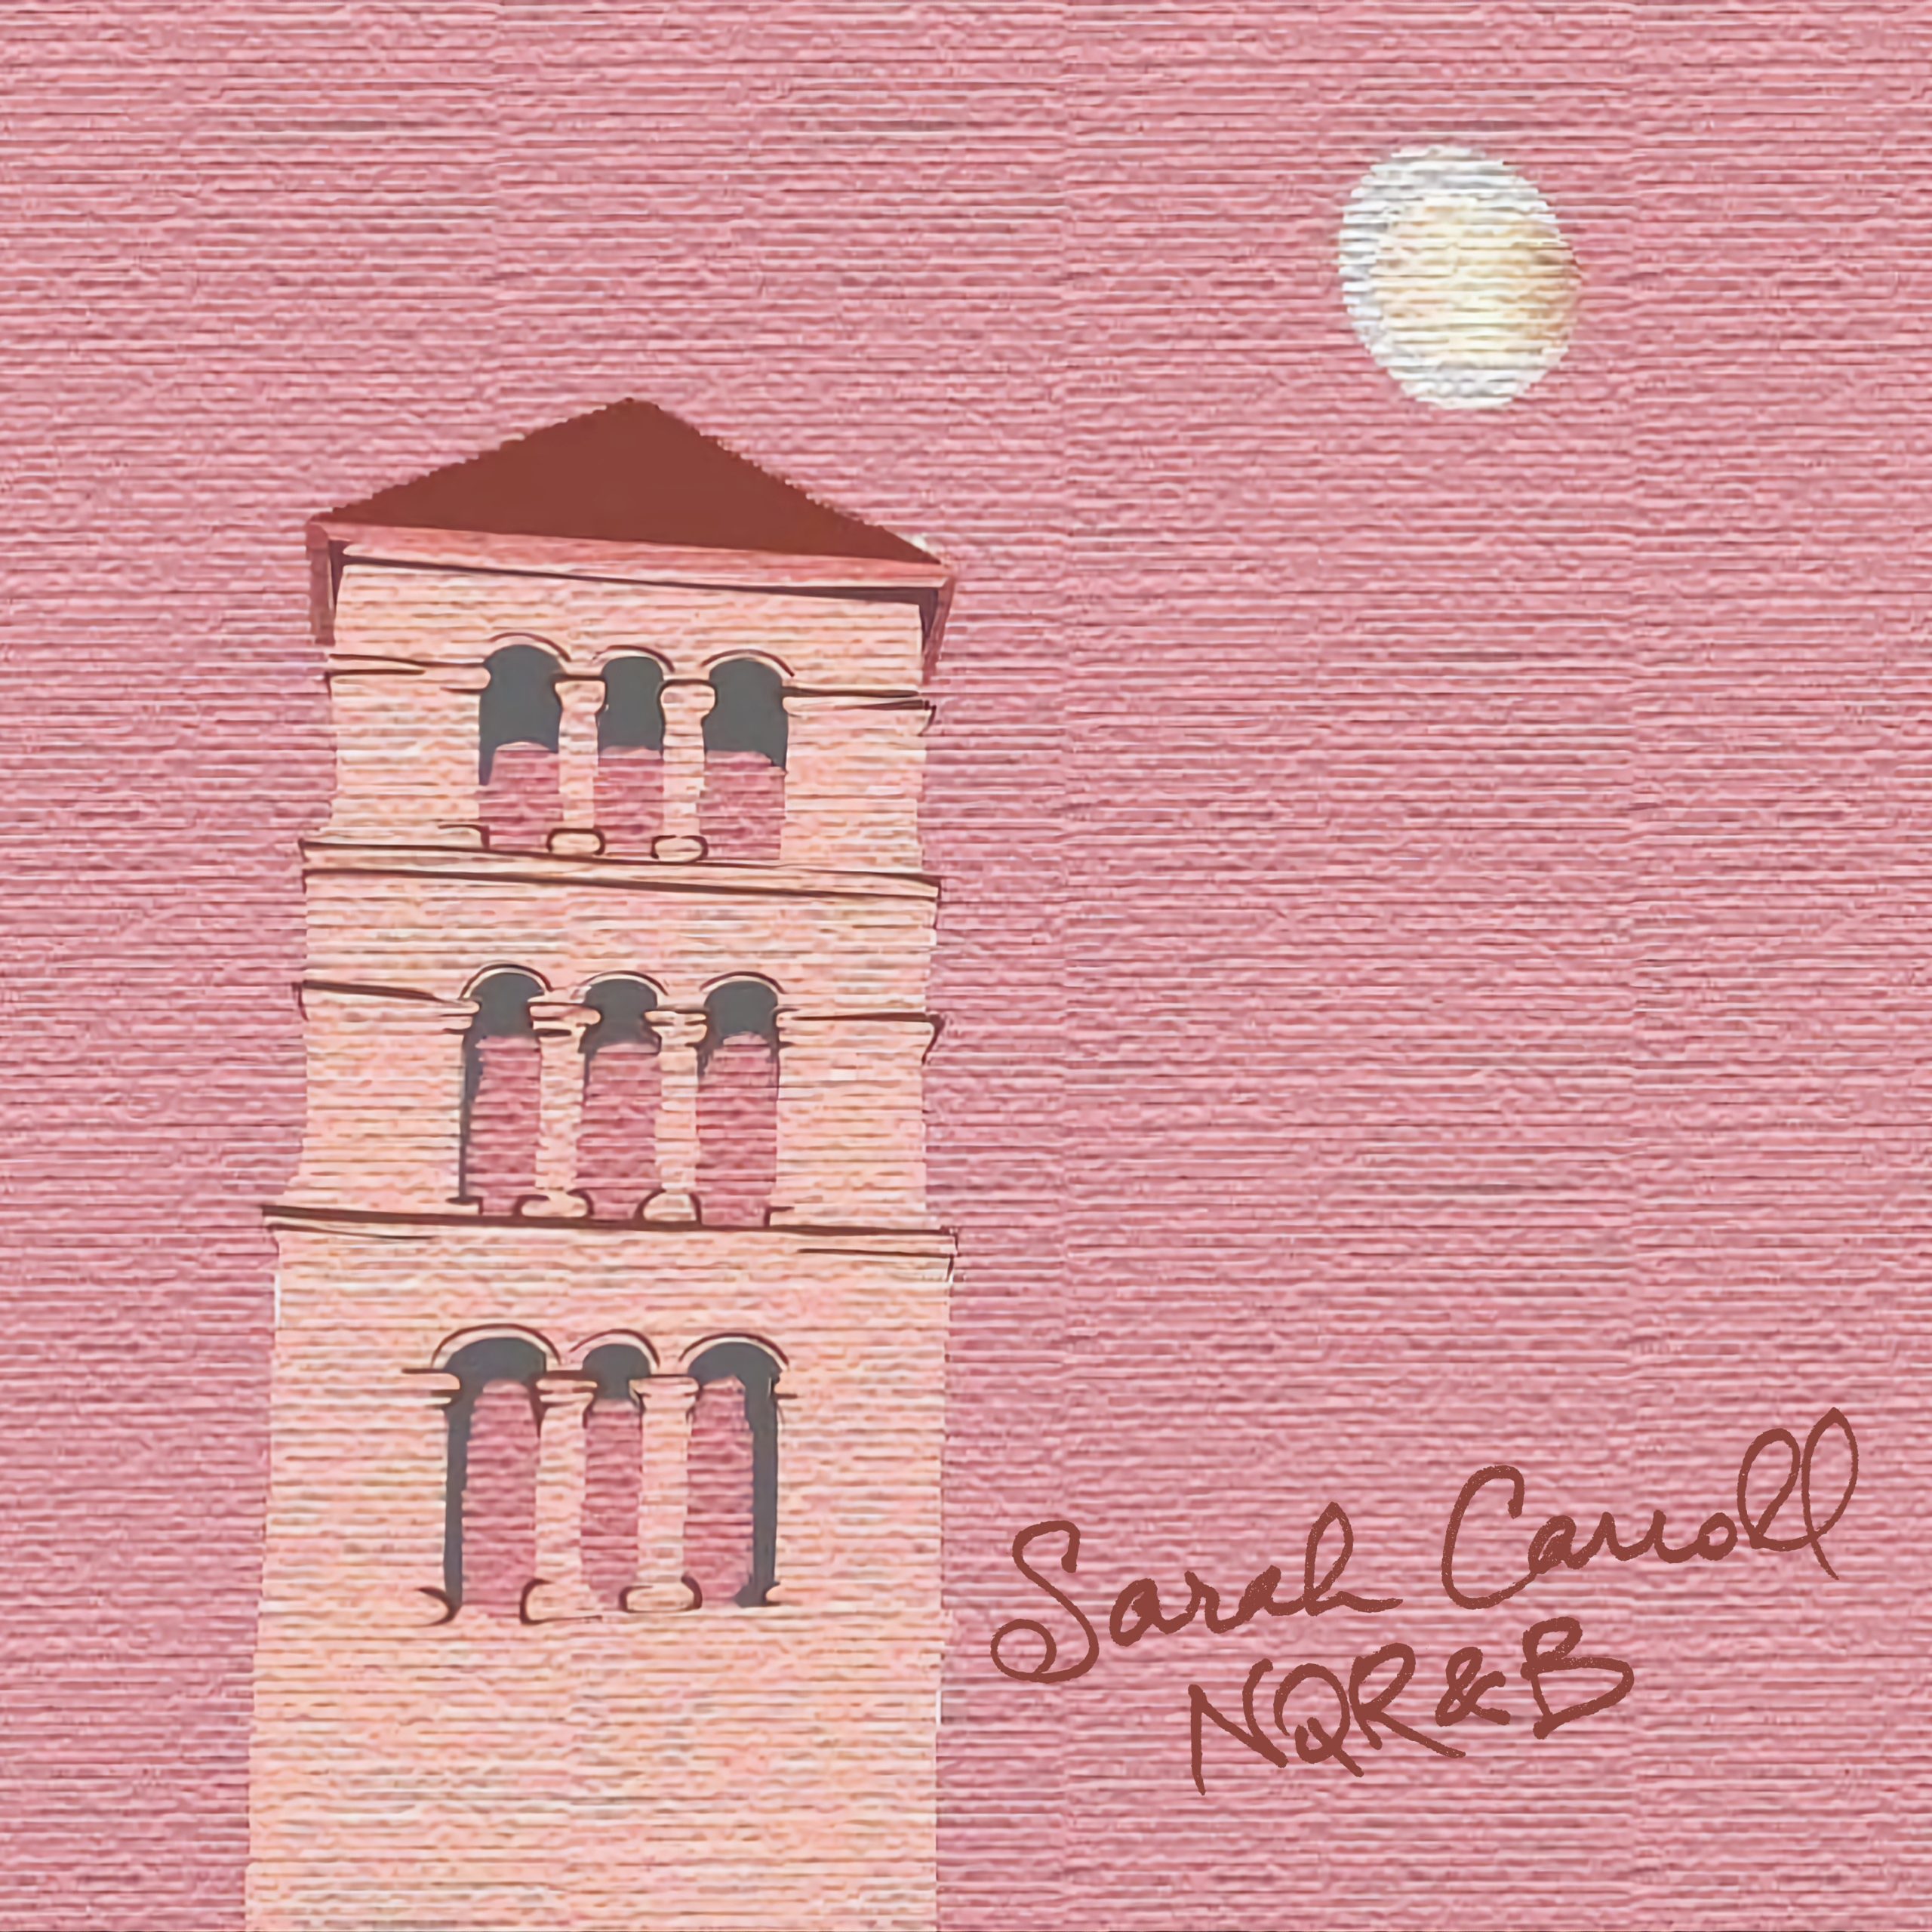 Sarah Carroll – NQR&B